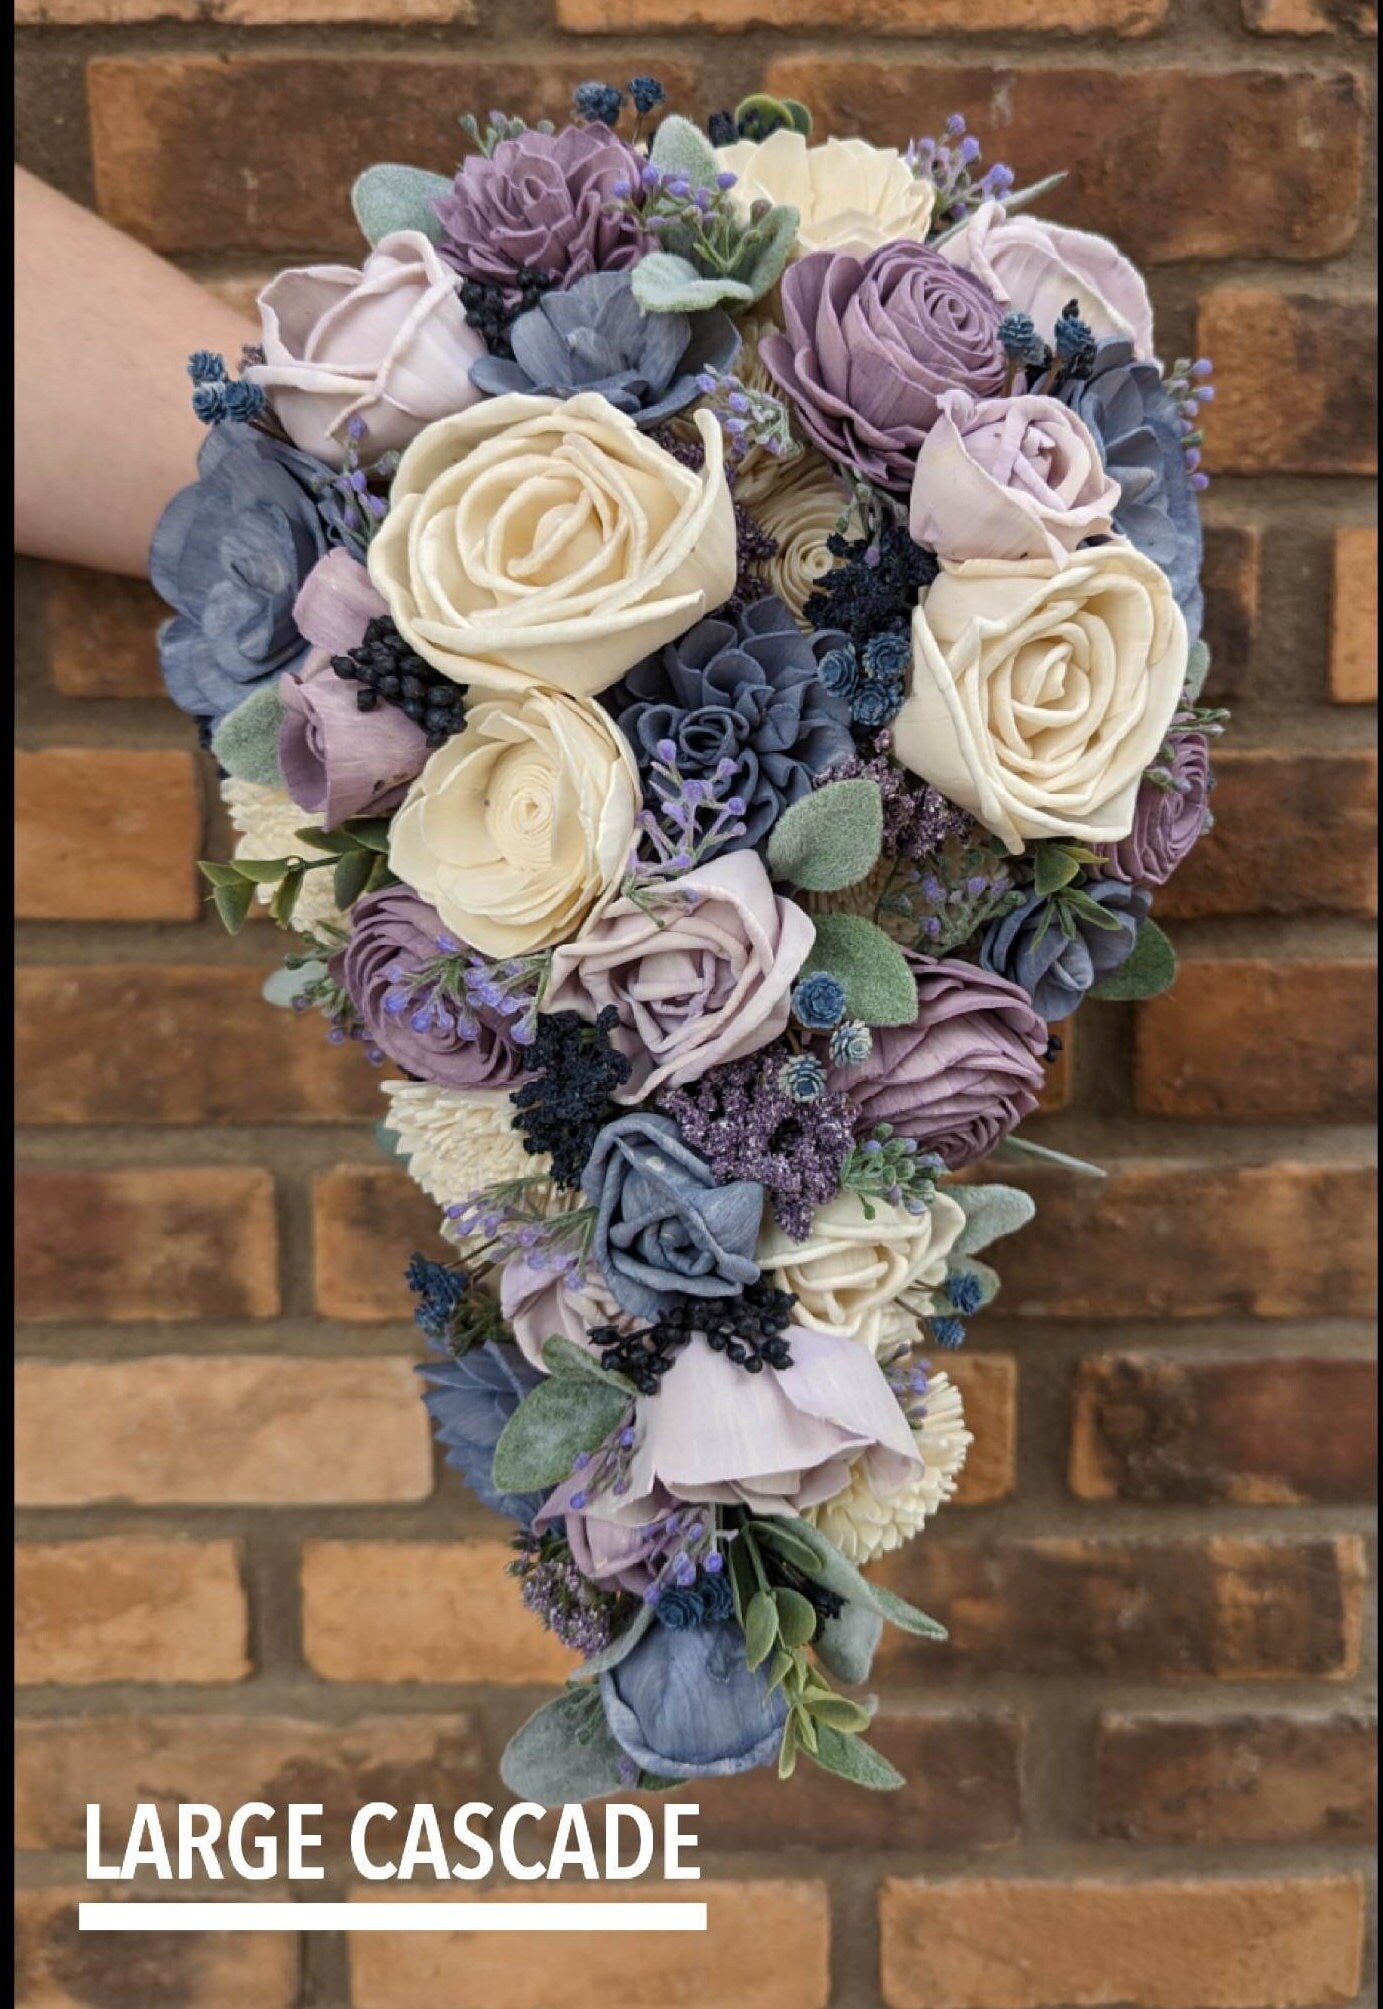 Wood Flower Bouquet, Lavender Wedding Bouquet, Dusty Blue Bridal Bouquet, Sola Wood Flowers, Fake Wedding Flowers